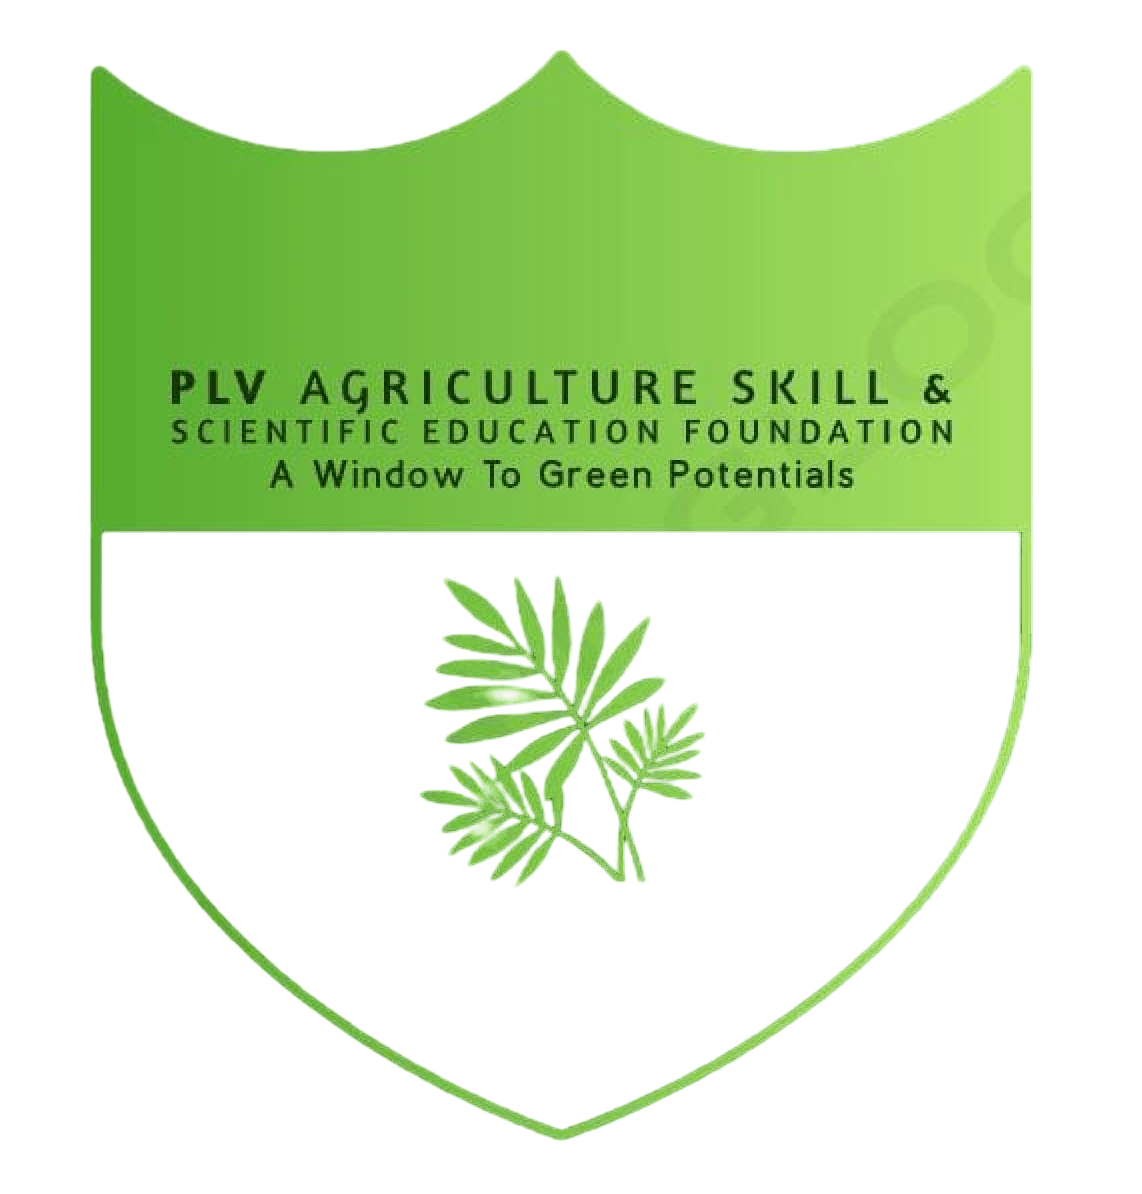 PLV Agriculture skill & Scientific Education Foundation